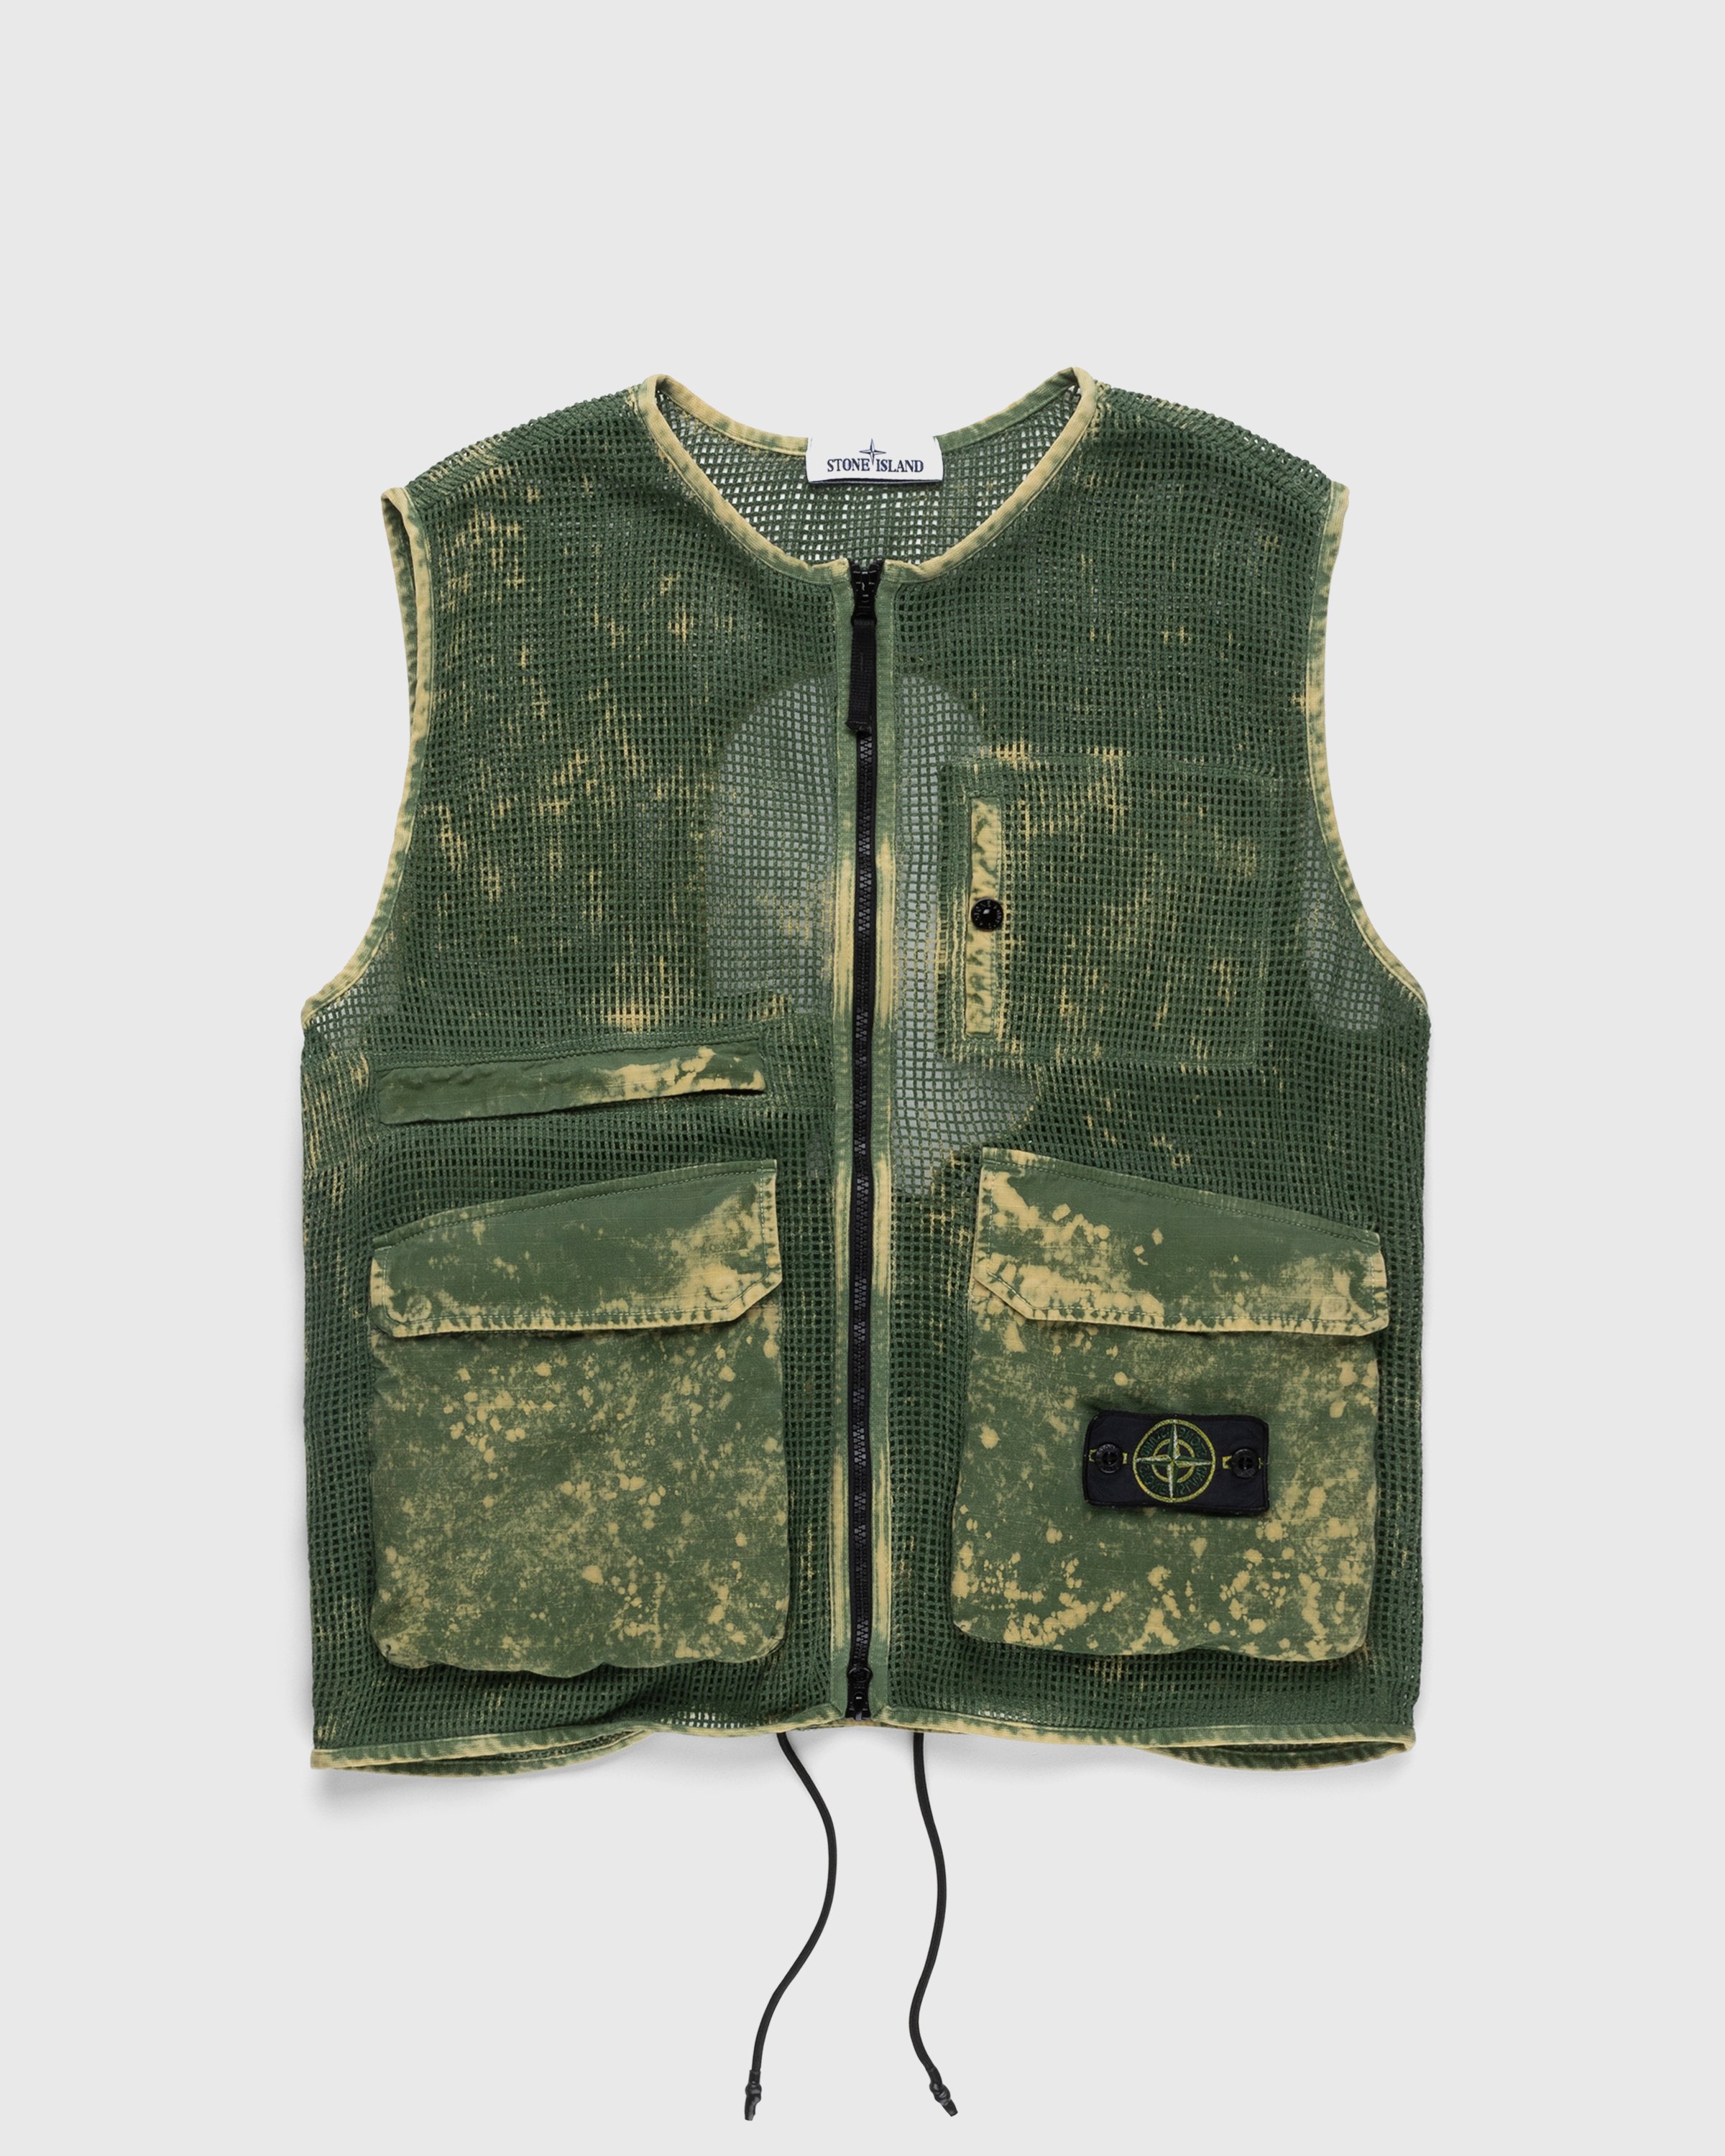 Stone Island - G0622 Garment-Dyed Cotton Mesh Vest Olive - Clothing - Green - Image 1